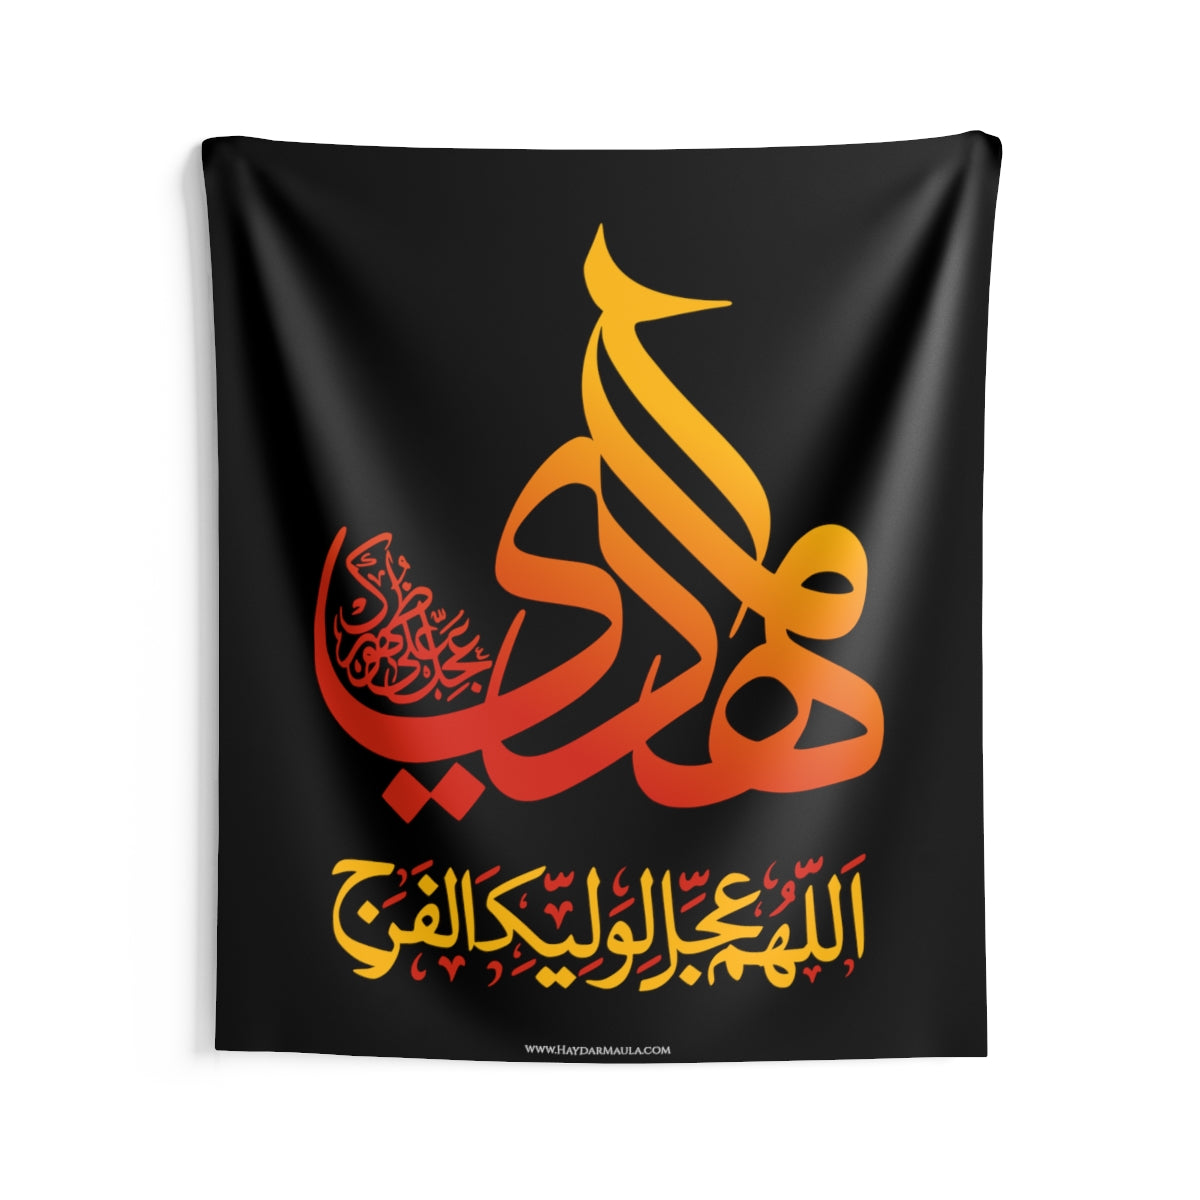 Ya Mahdi (as) Allahumma 'Ajjil Li Waliyyekal Faraj - Wall Tapestry Flag Banner